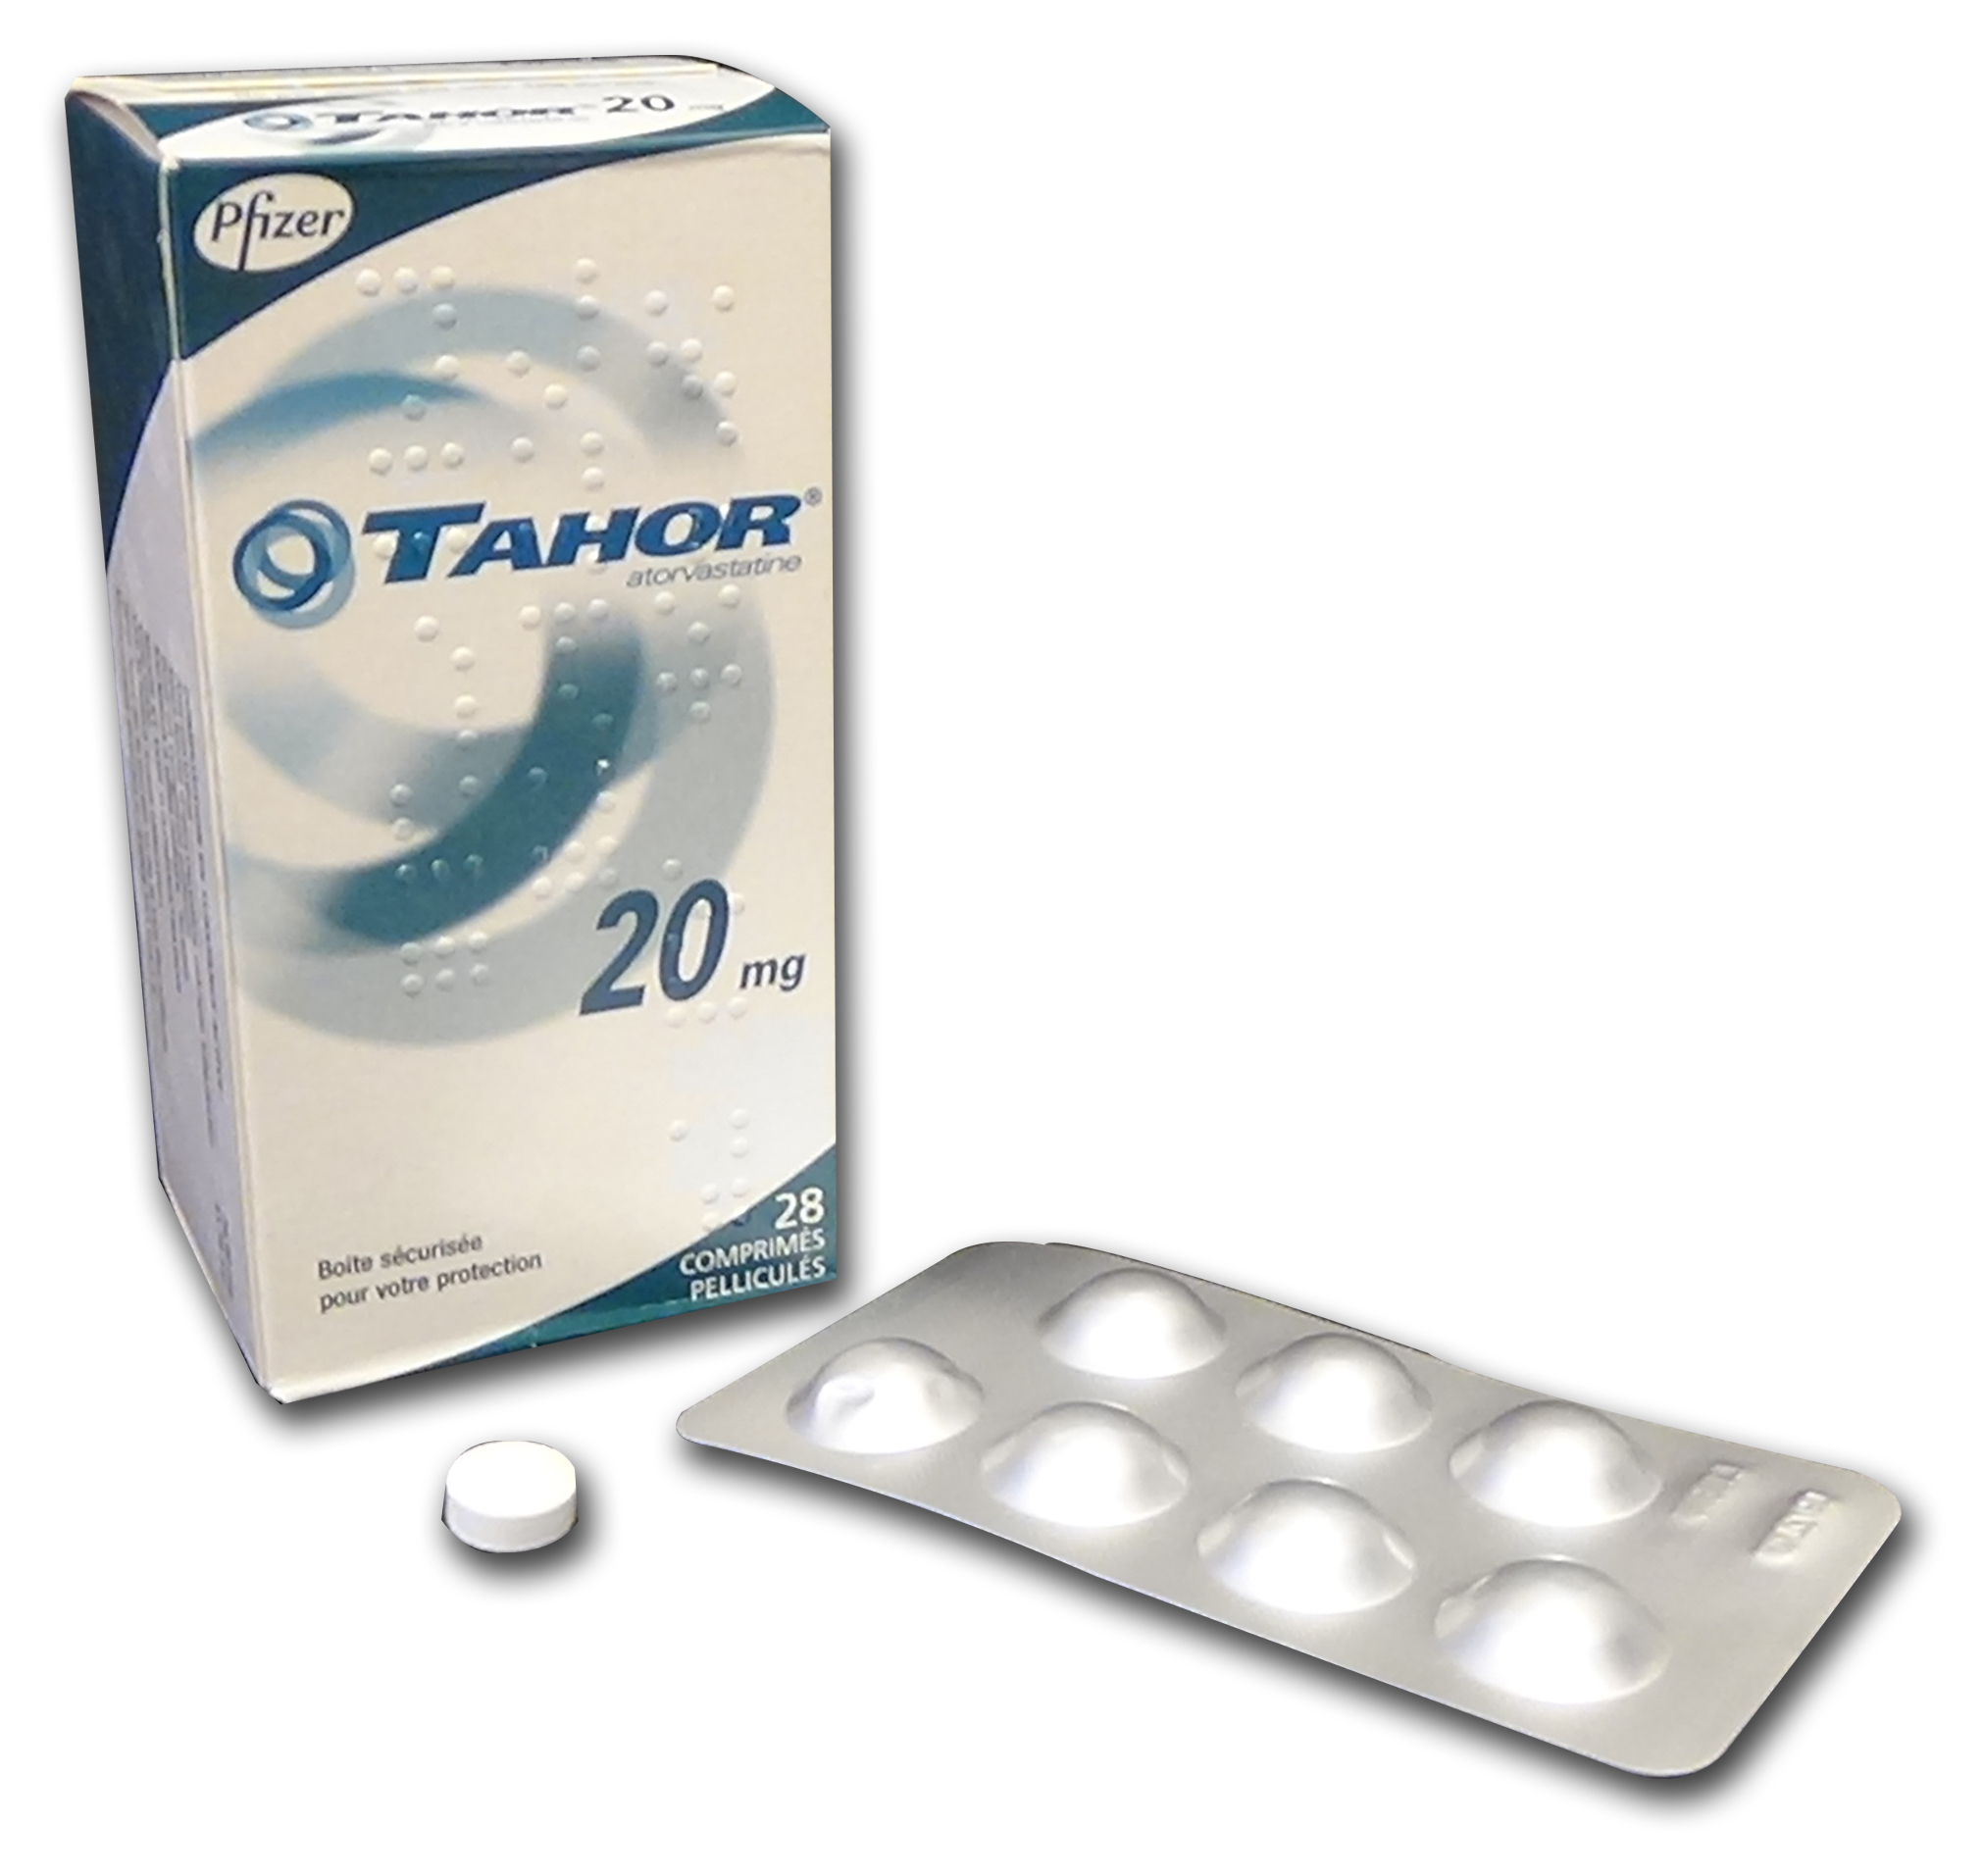 Visuel de l'emballage du médicament TAHOR 20 mg.